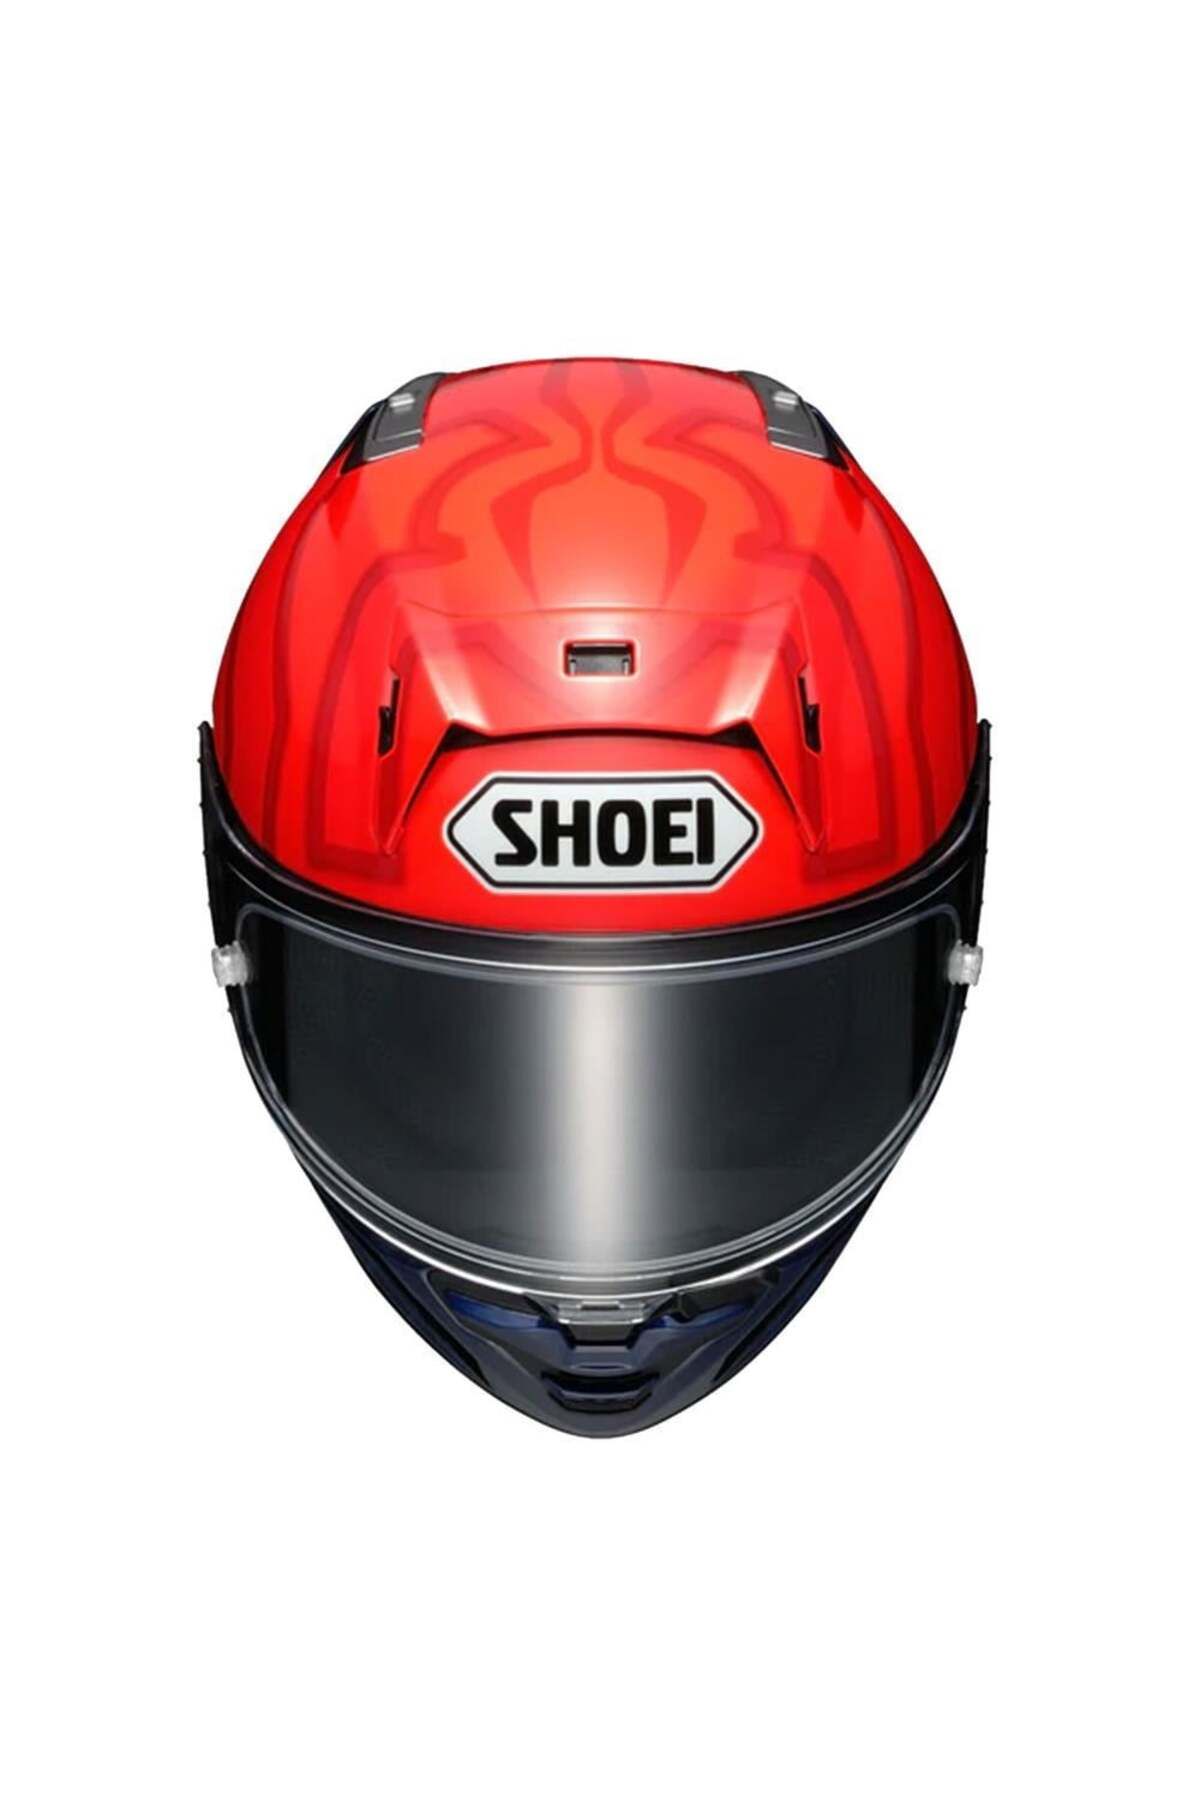 Shoei X-spirit Pro Marquez 7 Full Face Motosiklet Kaskı